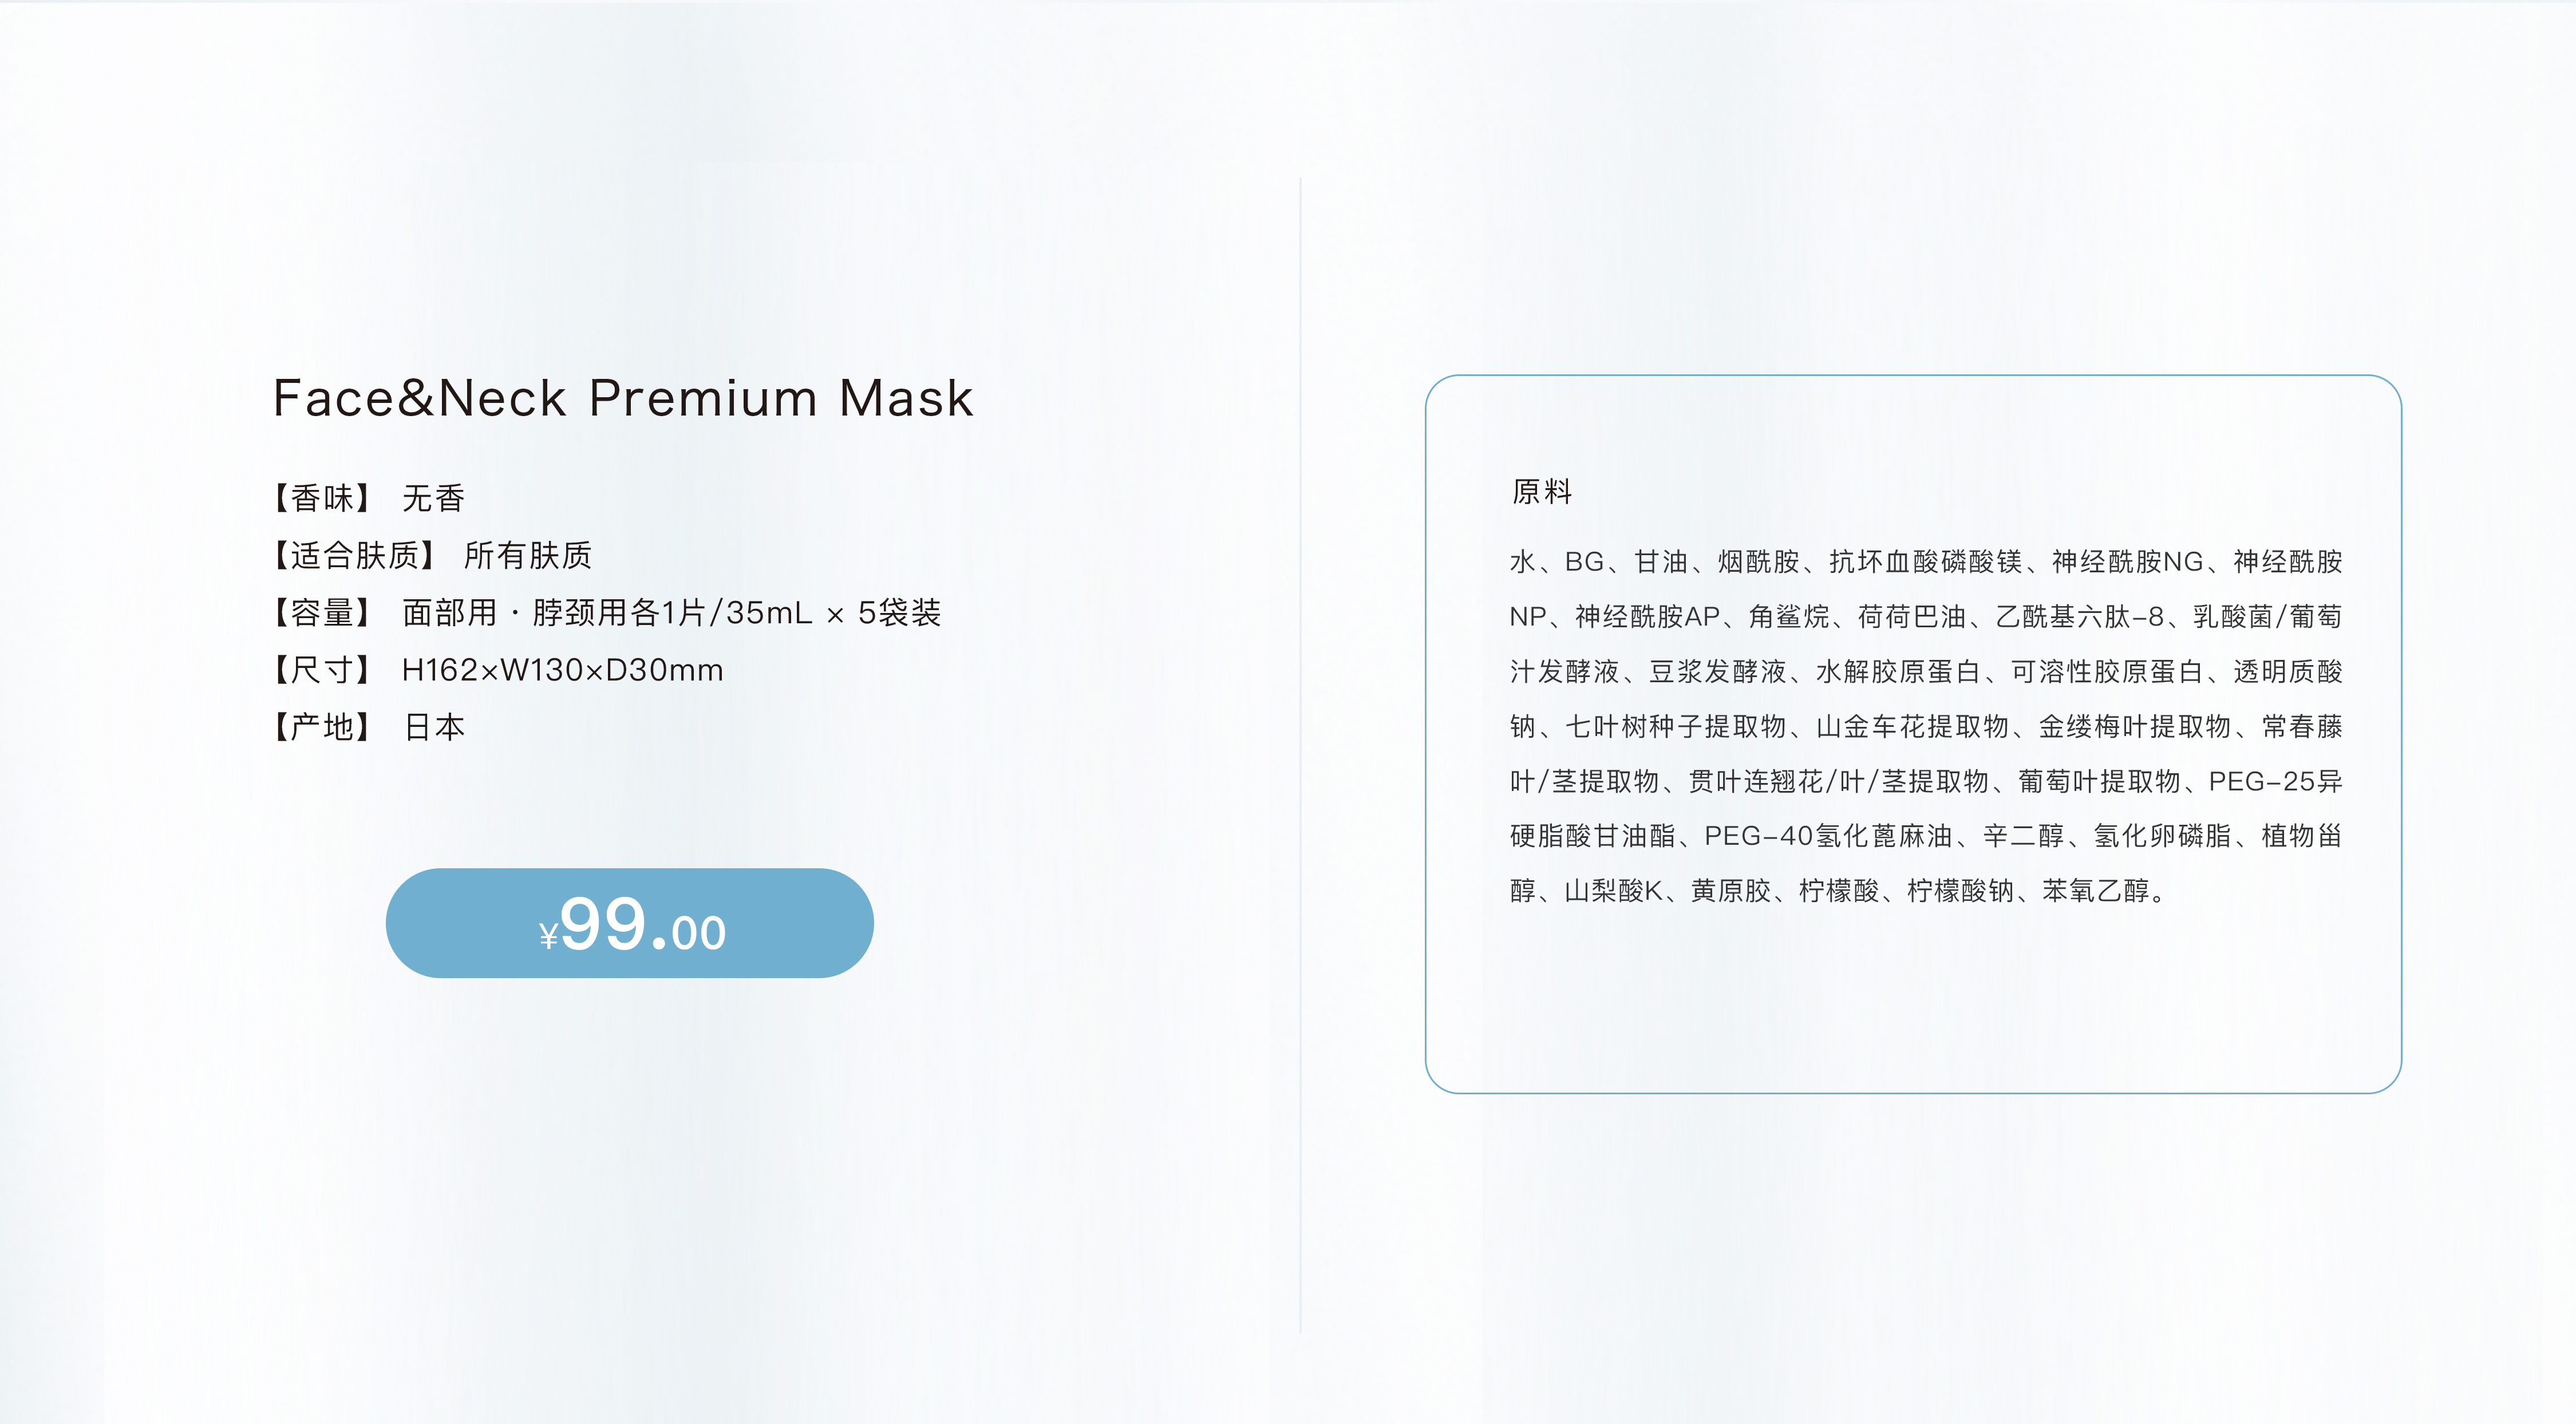 Face & Neck Premium Mask 商品の概要と成分表示。